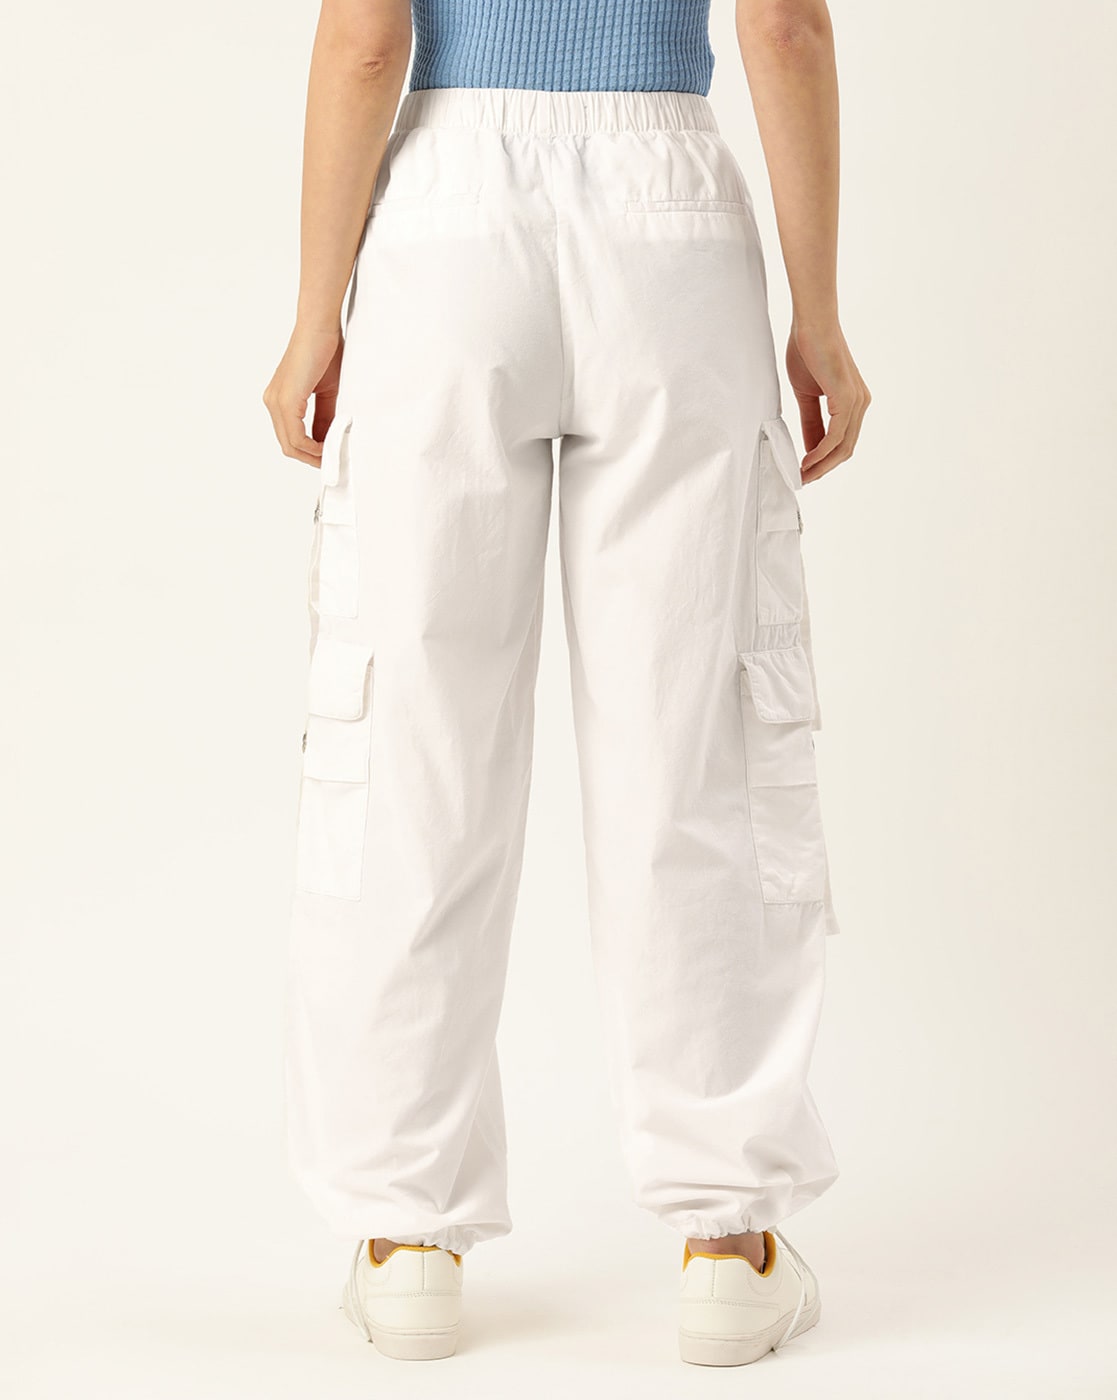 Buy SSoShHub Women/Girl Cotton Regular Fit 6 Pocket Cargo Pants Regular Fit  Online at Best Prices in India - JioMart.